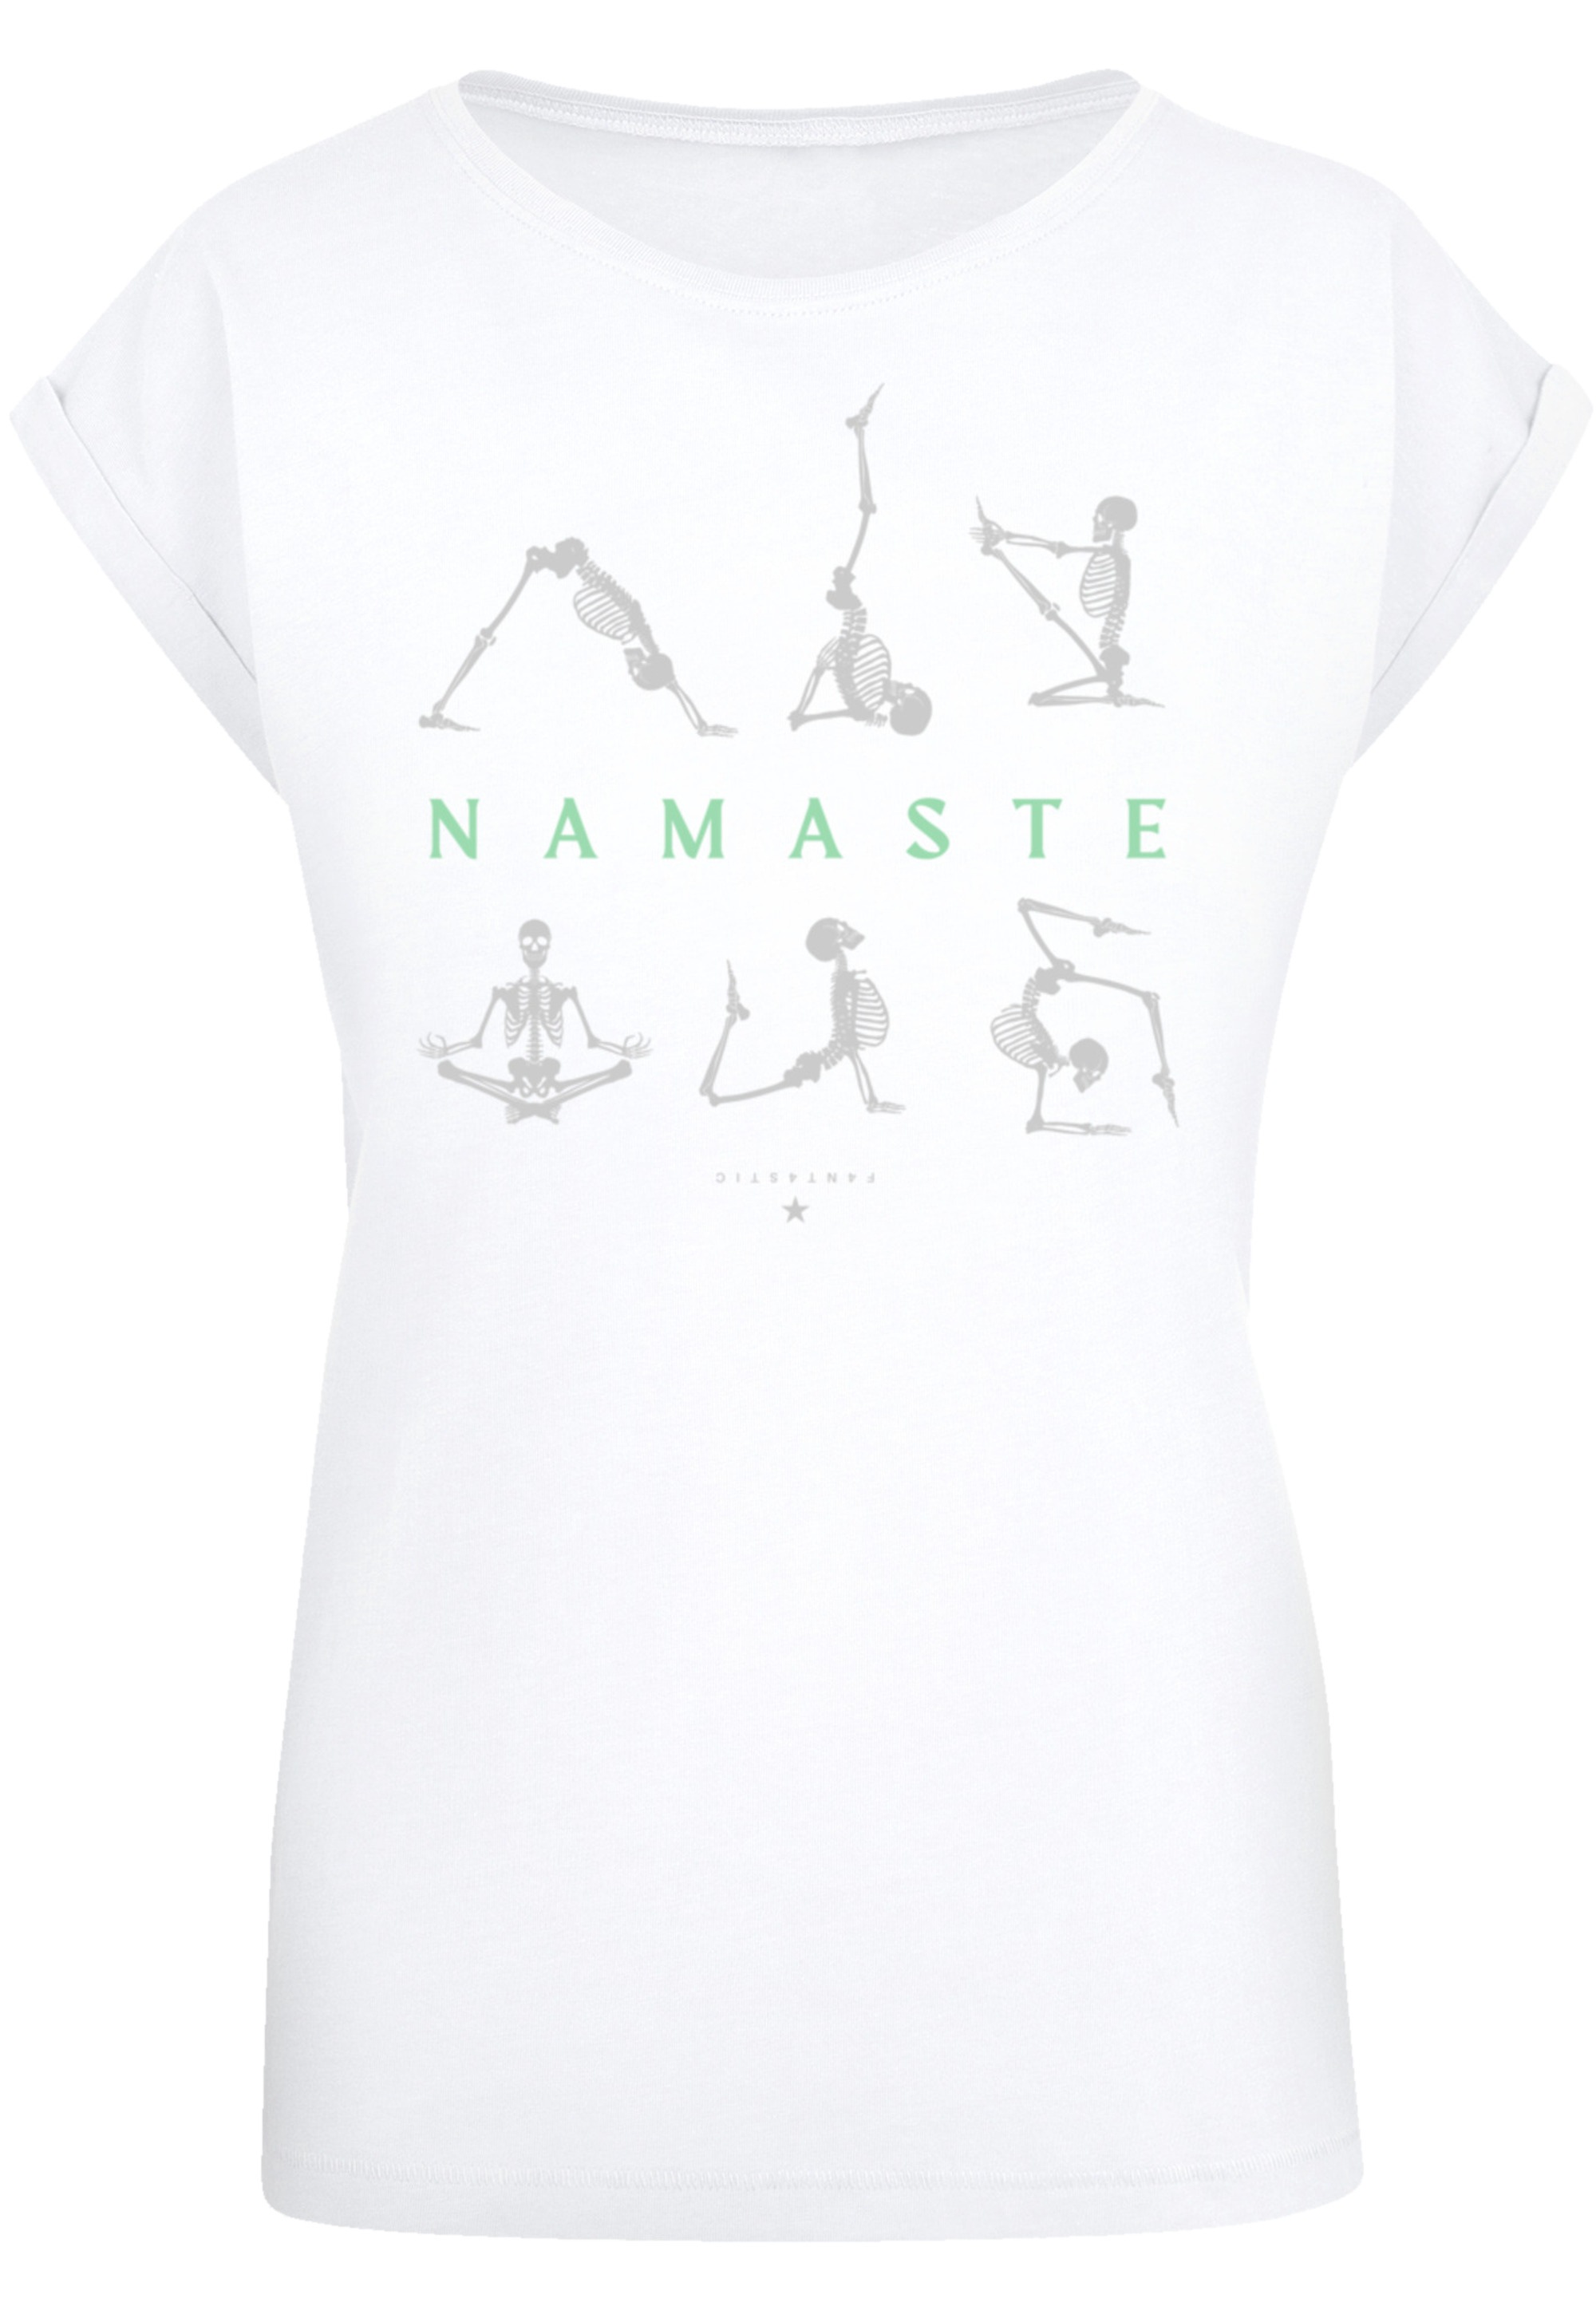 F4NT4STIC T-Shirt für Halloween«, »Namaste Skelett Print BAUR Yoga | kaufen